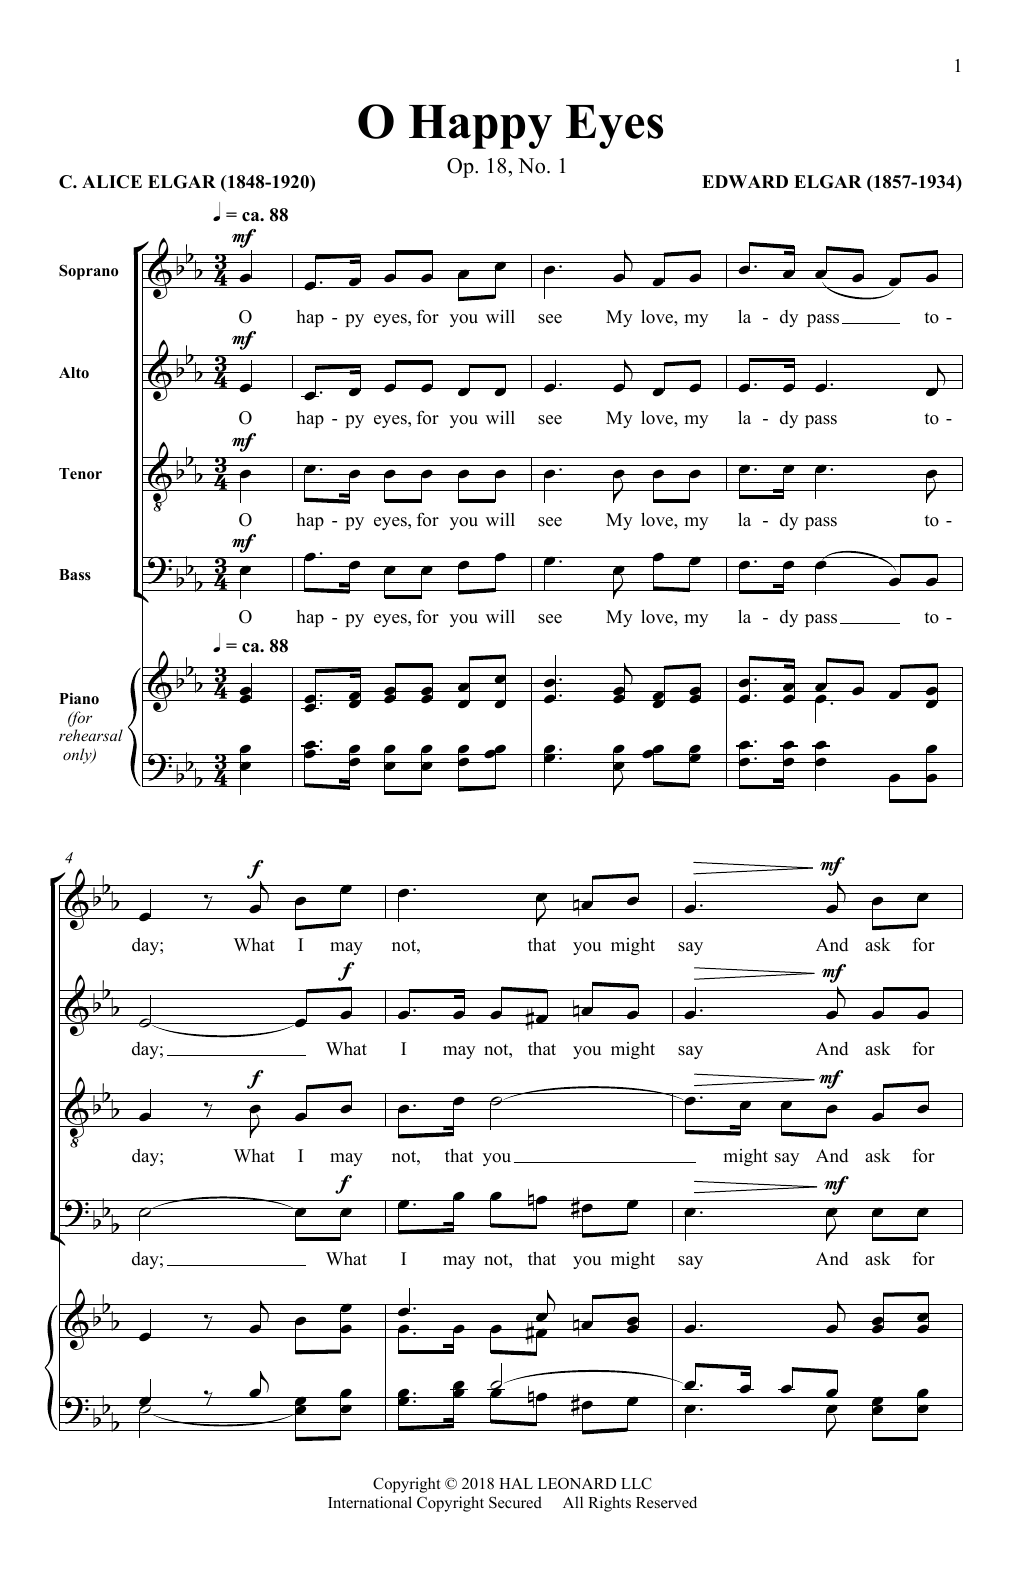 Edward Elgar O Happy Eyes Sheet Music Notes & Chords for SATB Choir - Download or Print PDF